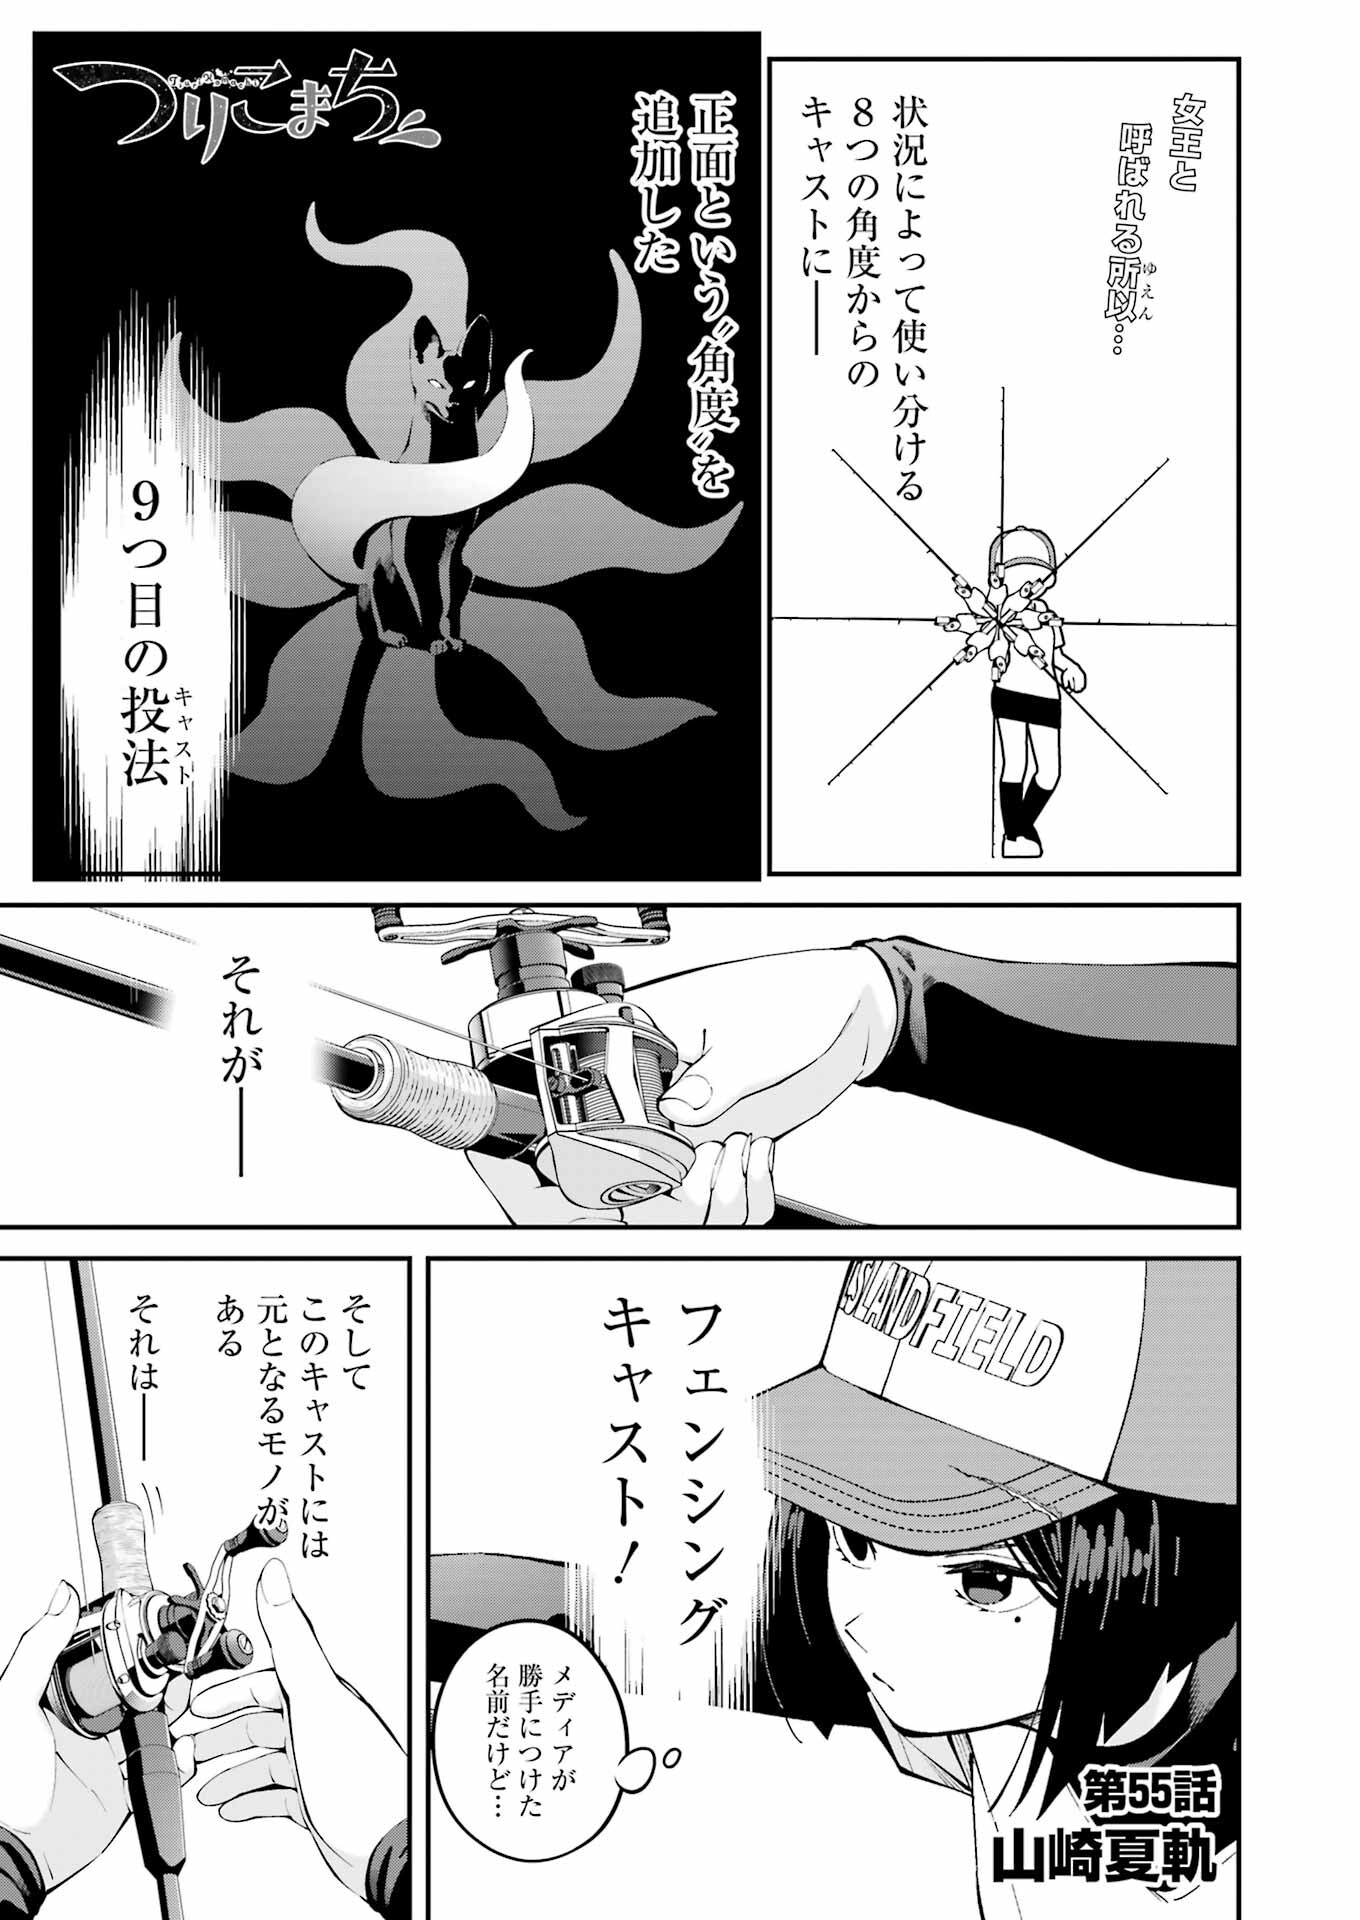 Tsuri Komachi - Chapter 55 - Page 1